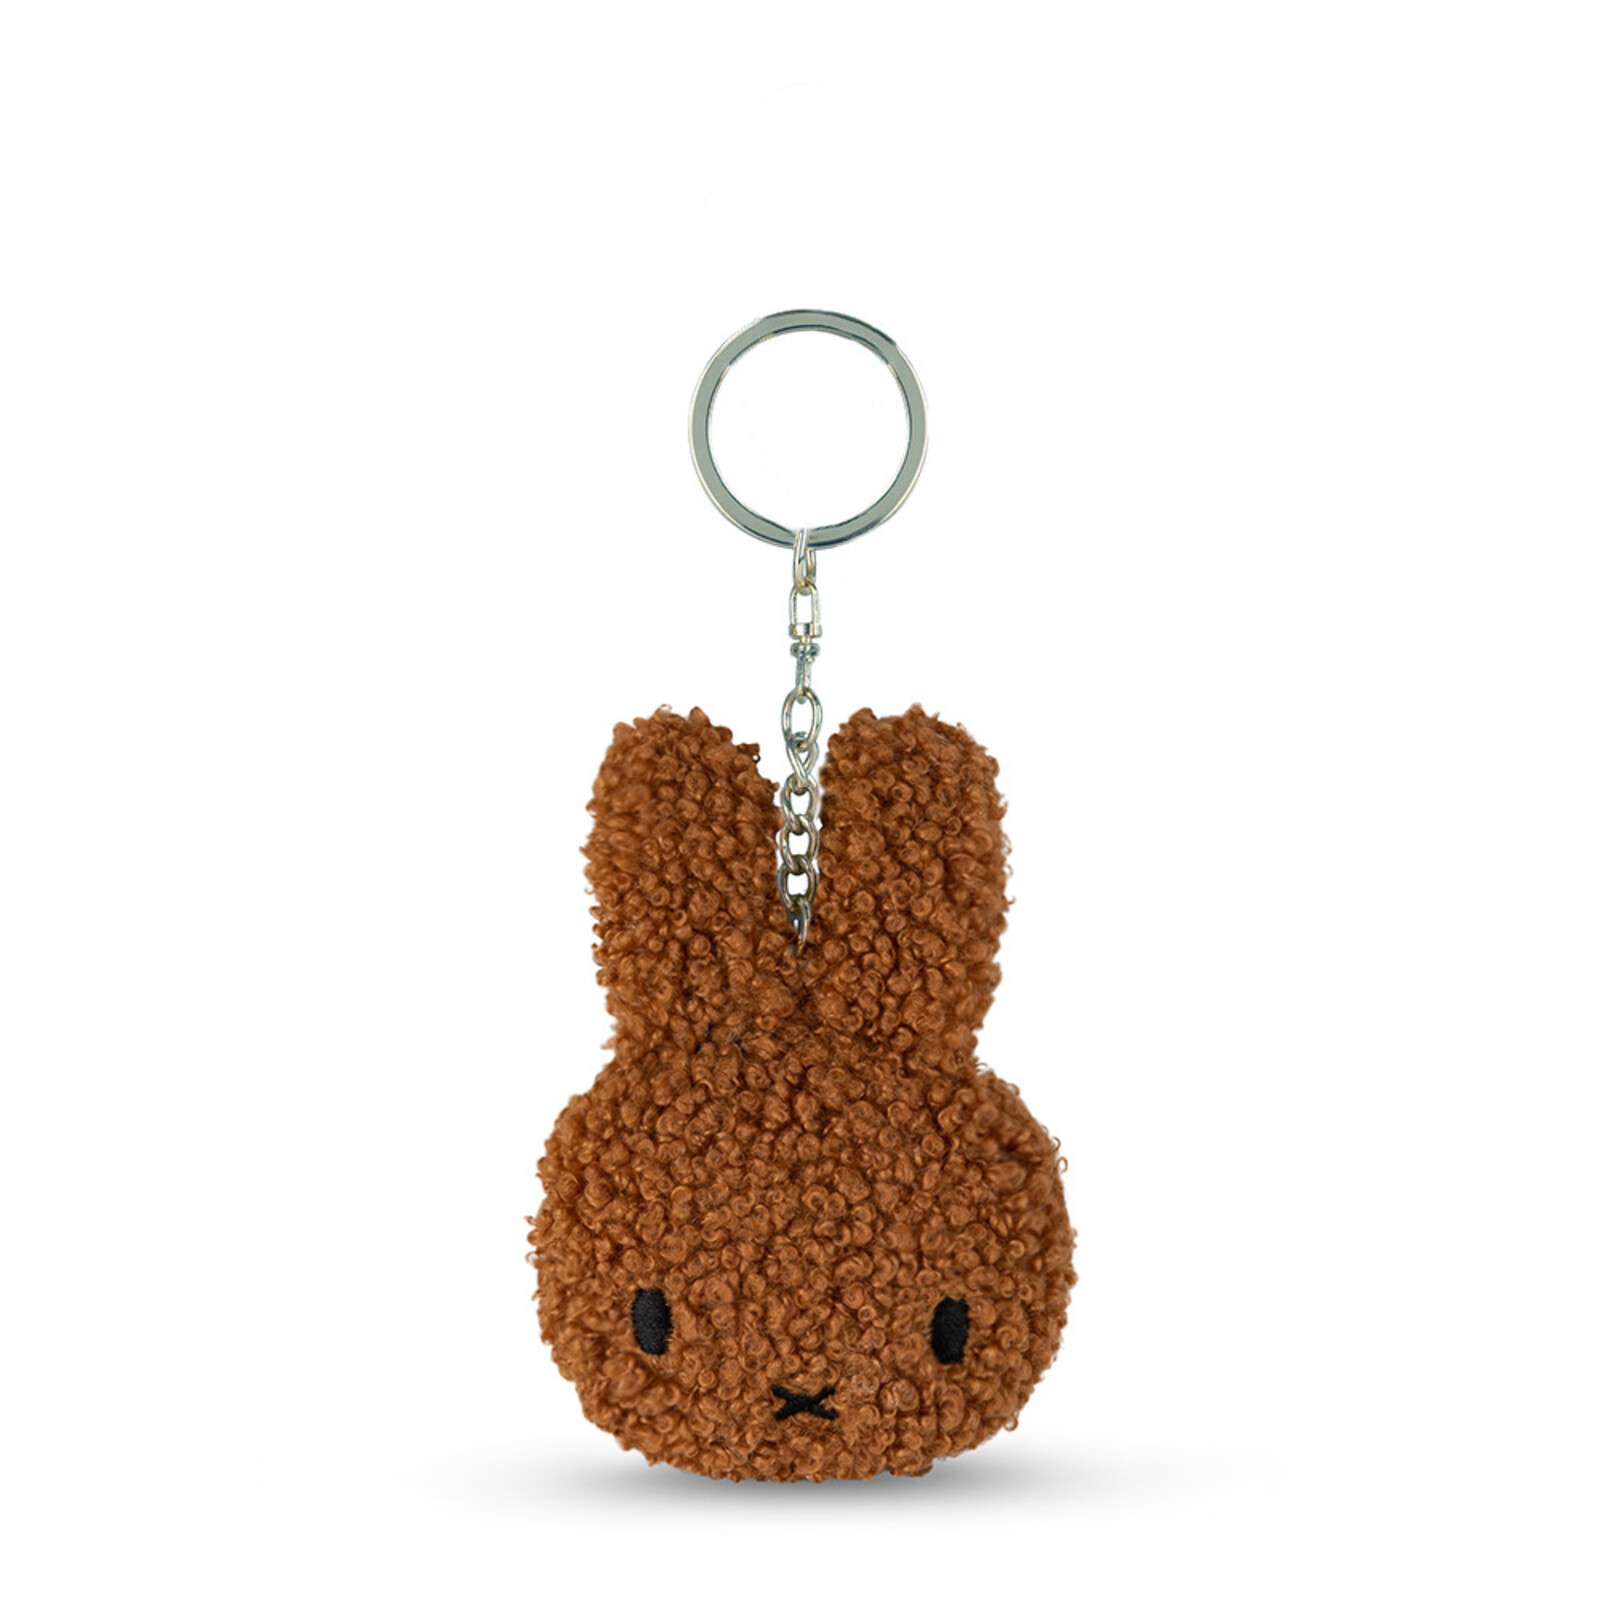 Miffy Flat Keychain Tiny Teddy Cinnamon - 10 cm - 4"